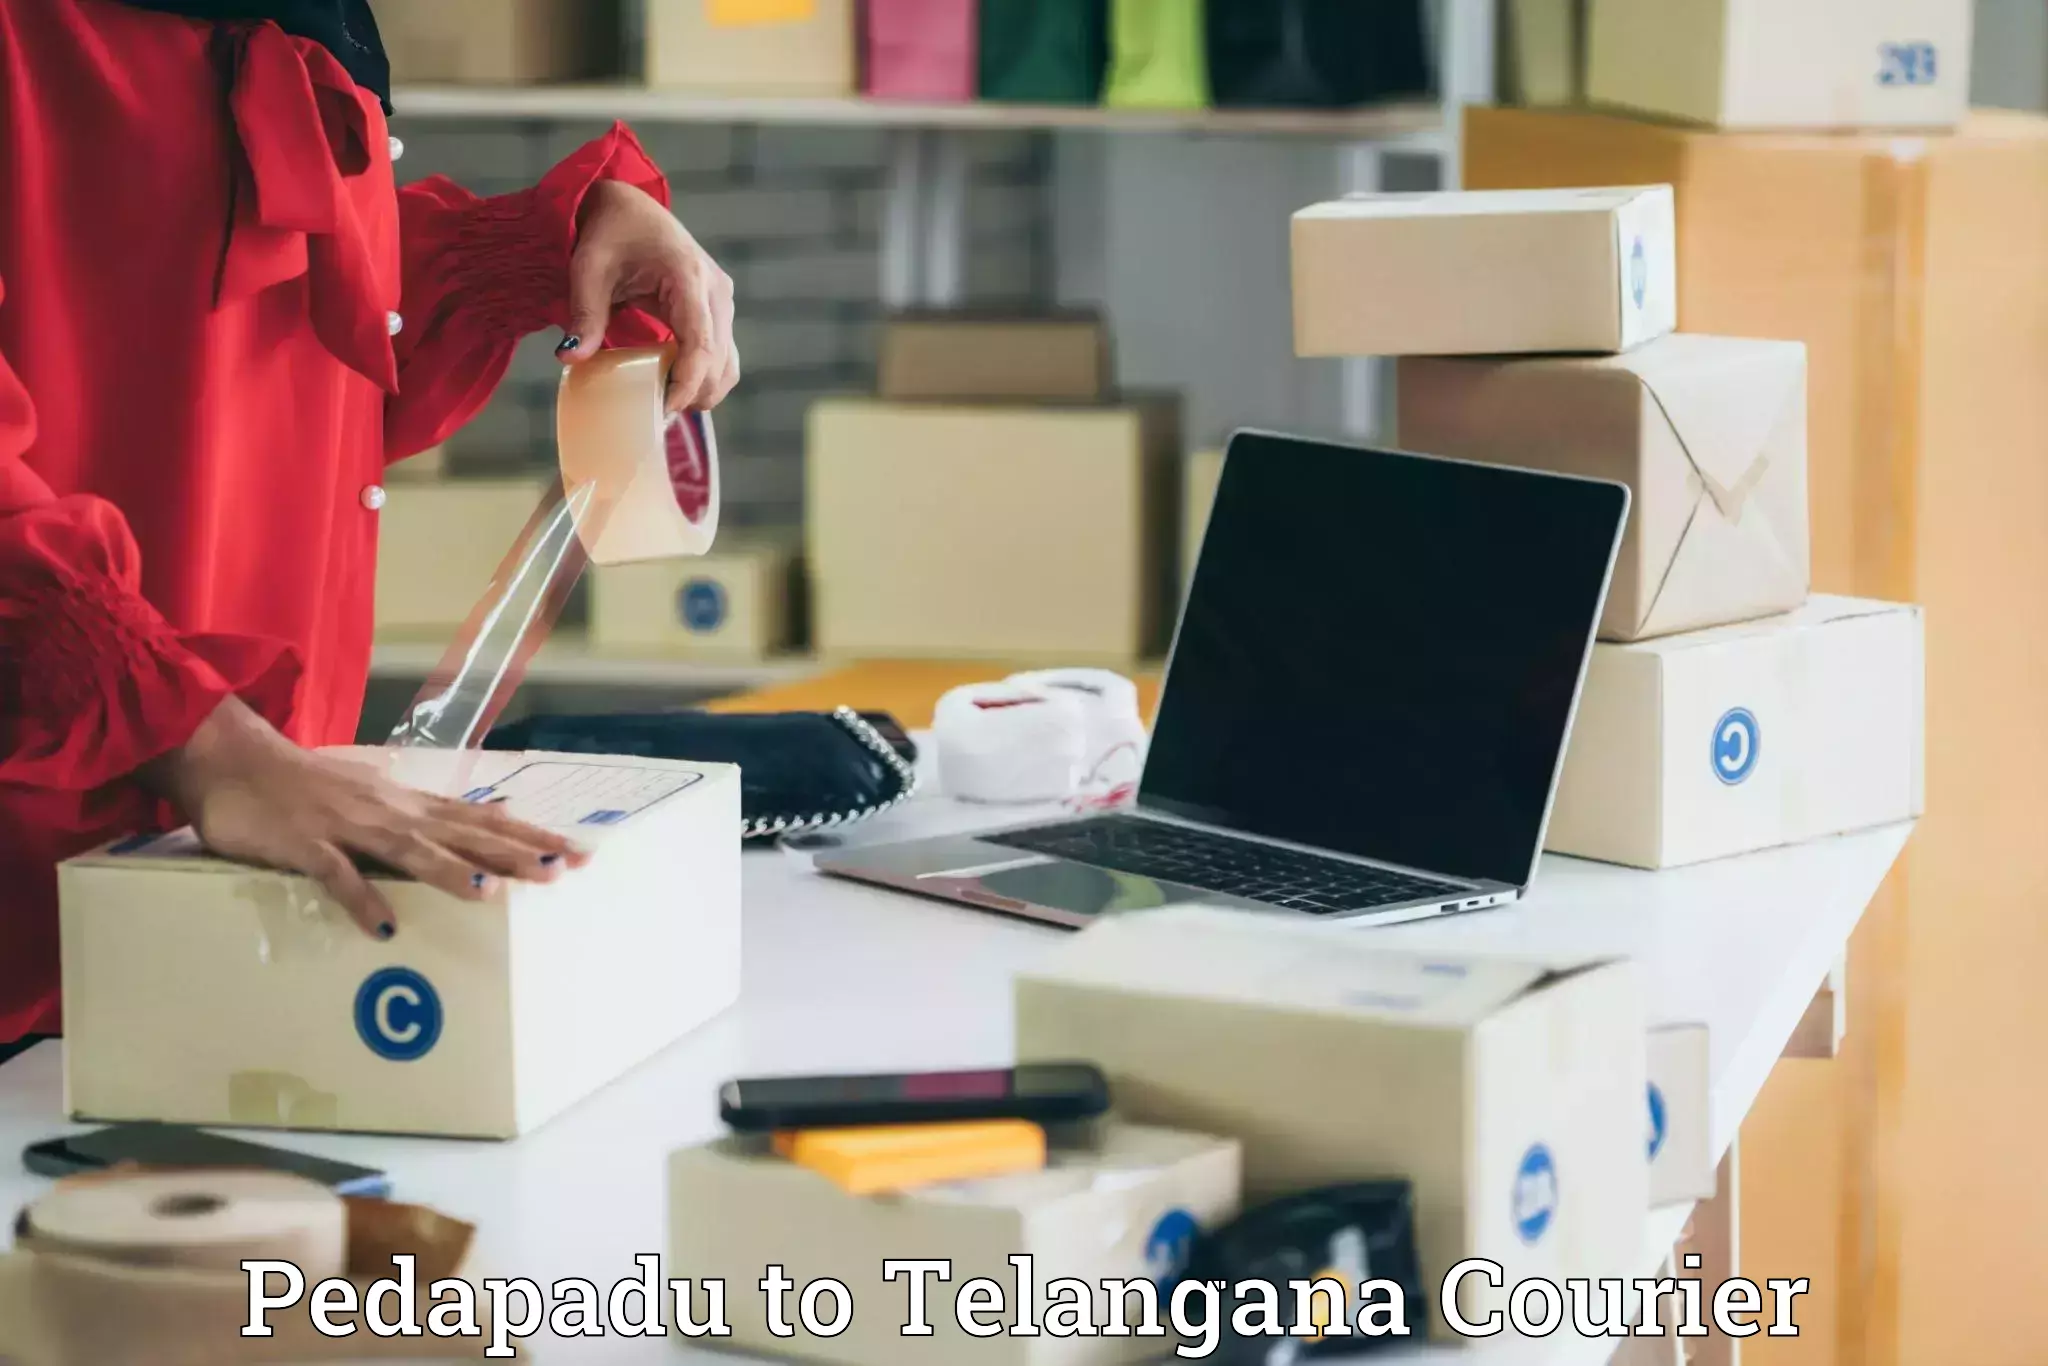 Sustainable courier practices Pedapadu to Yellandu